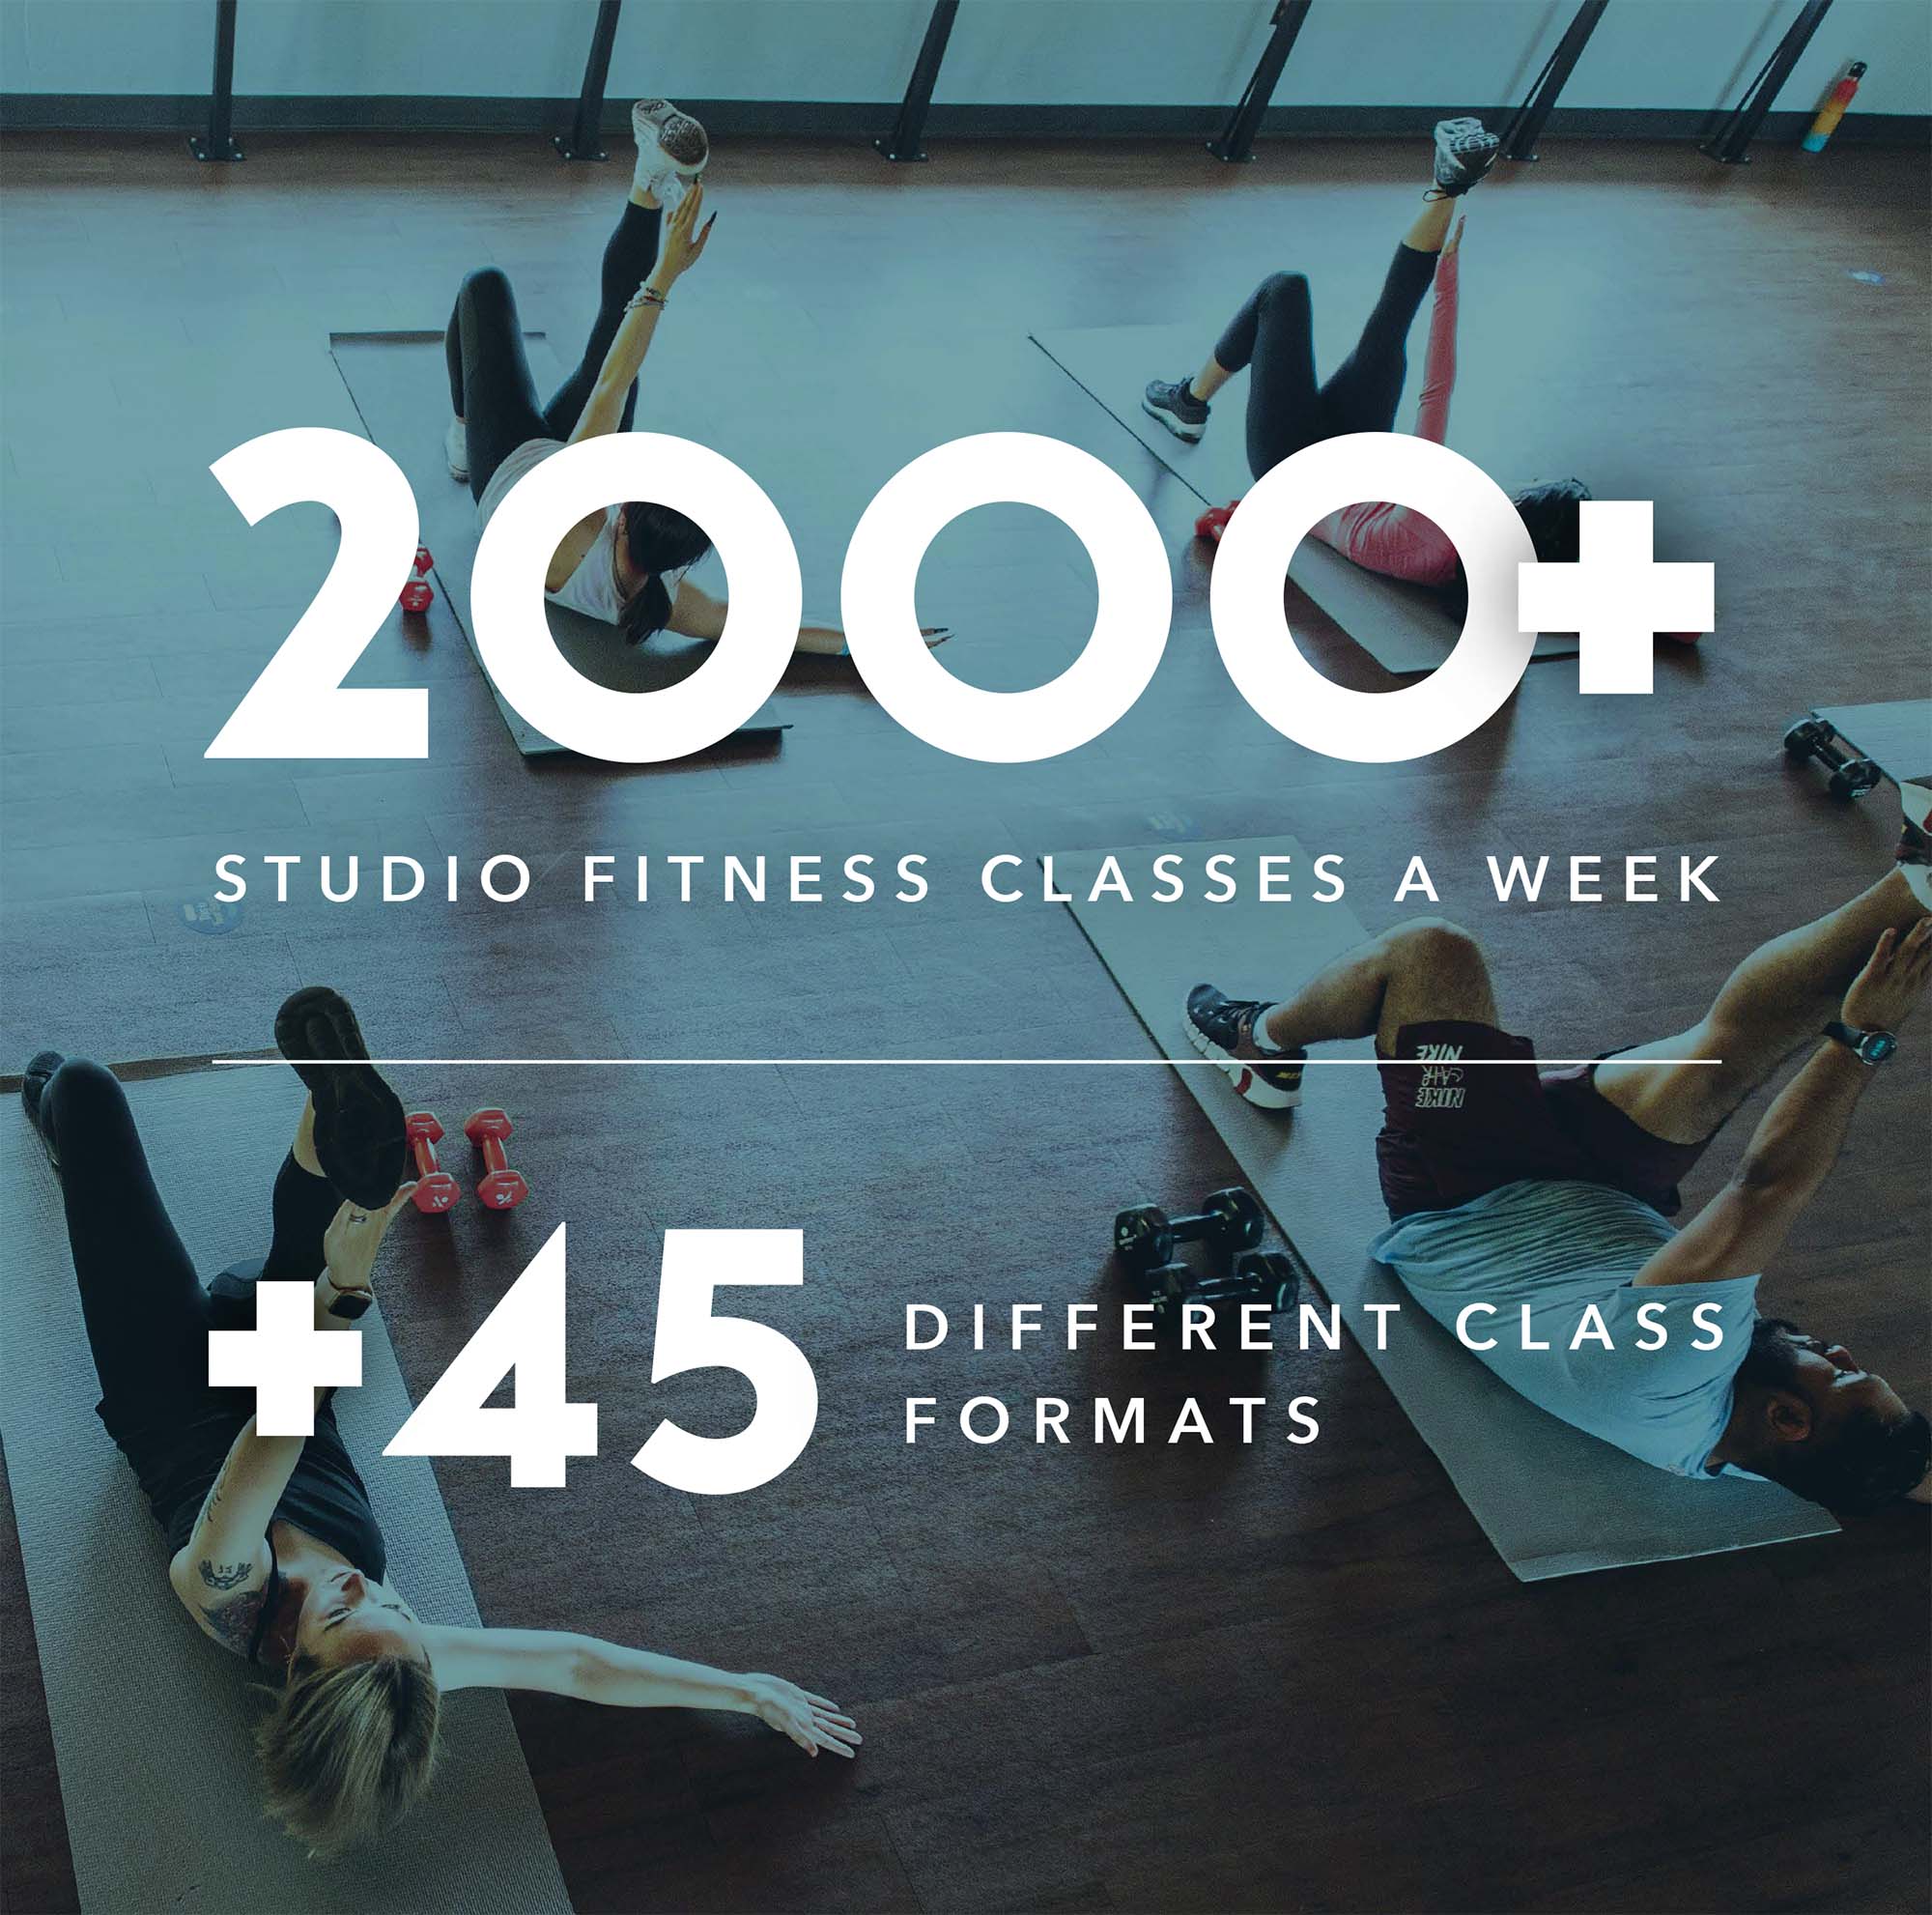 Over 2000 Studio Fitness Classes Per Week